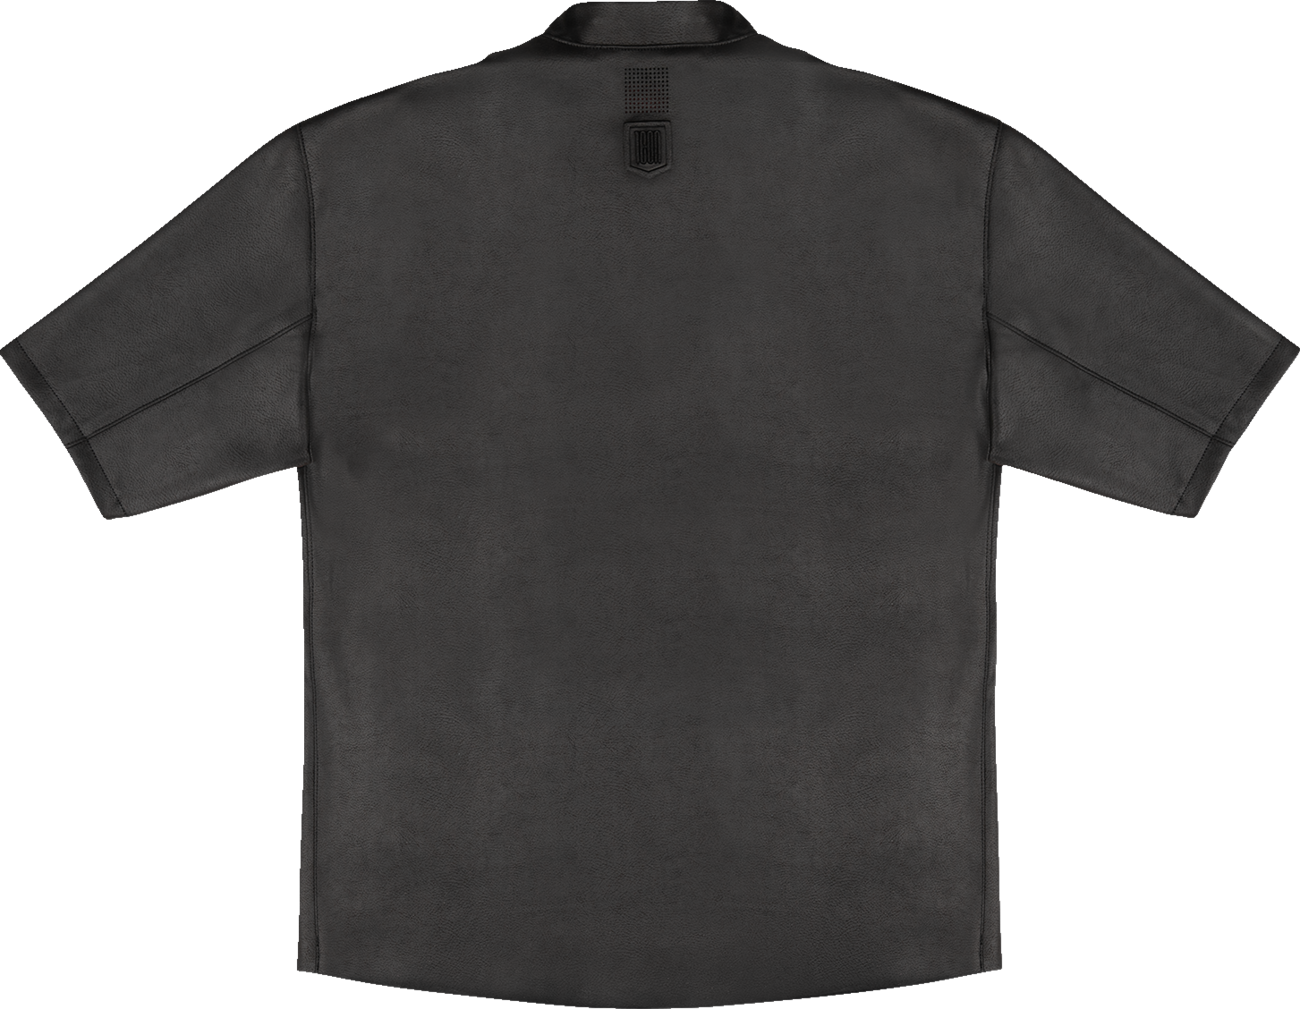 ICON Short Track™ Jacket - Short-Sleeve - Black - Small 2820-6761